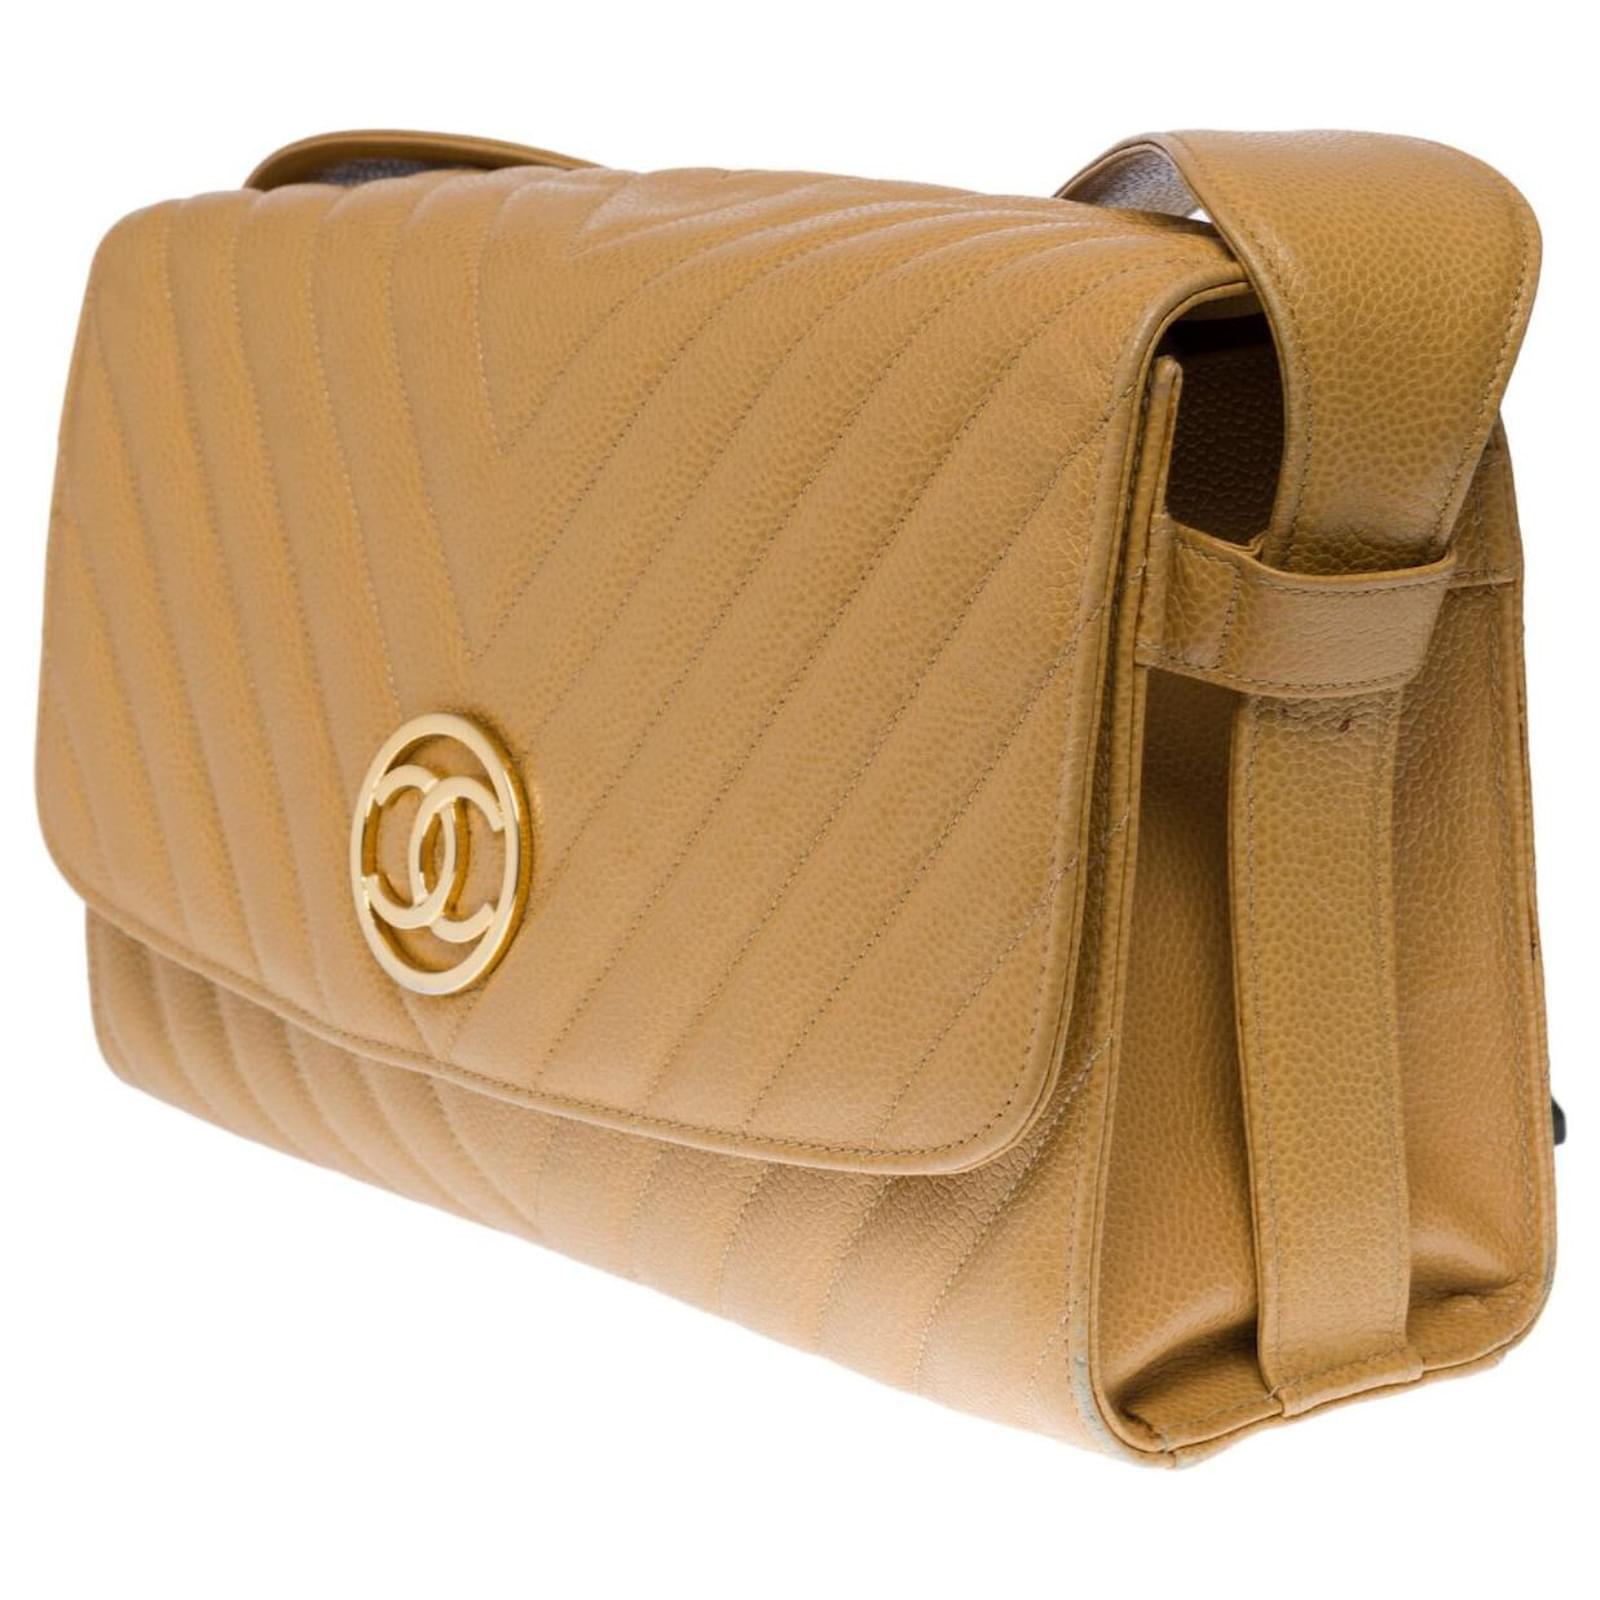 Beautiful Chanel Flap bag herringbone handbag in golden beige